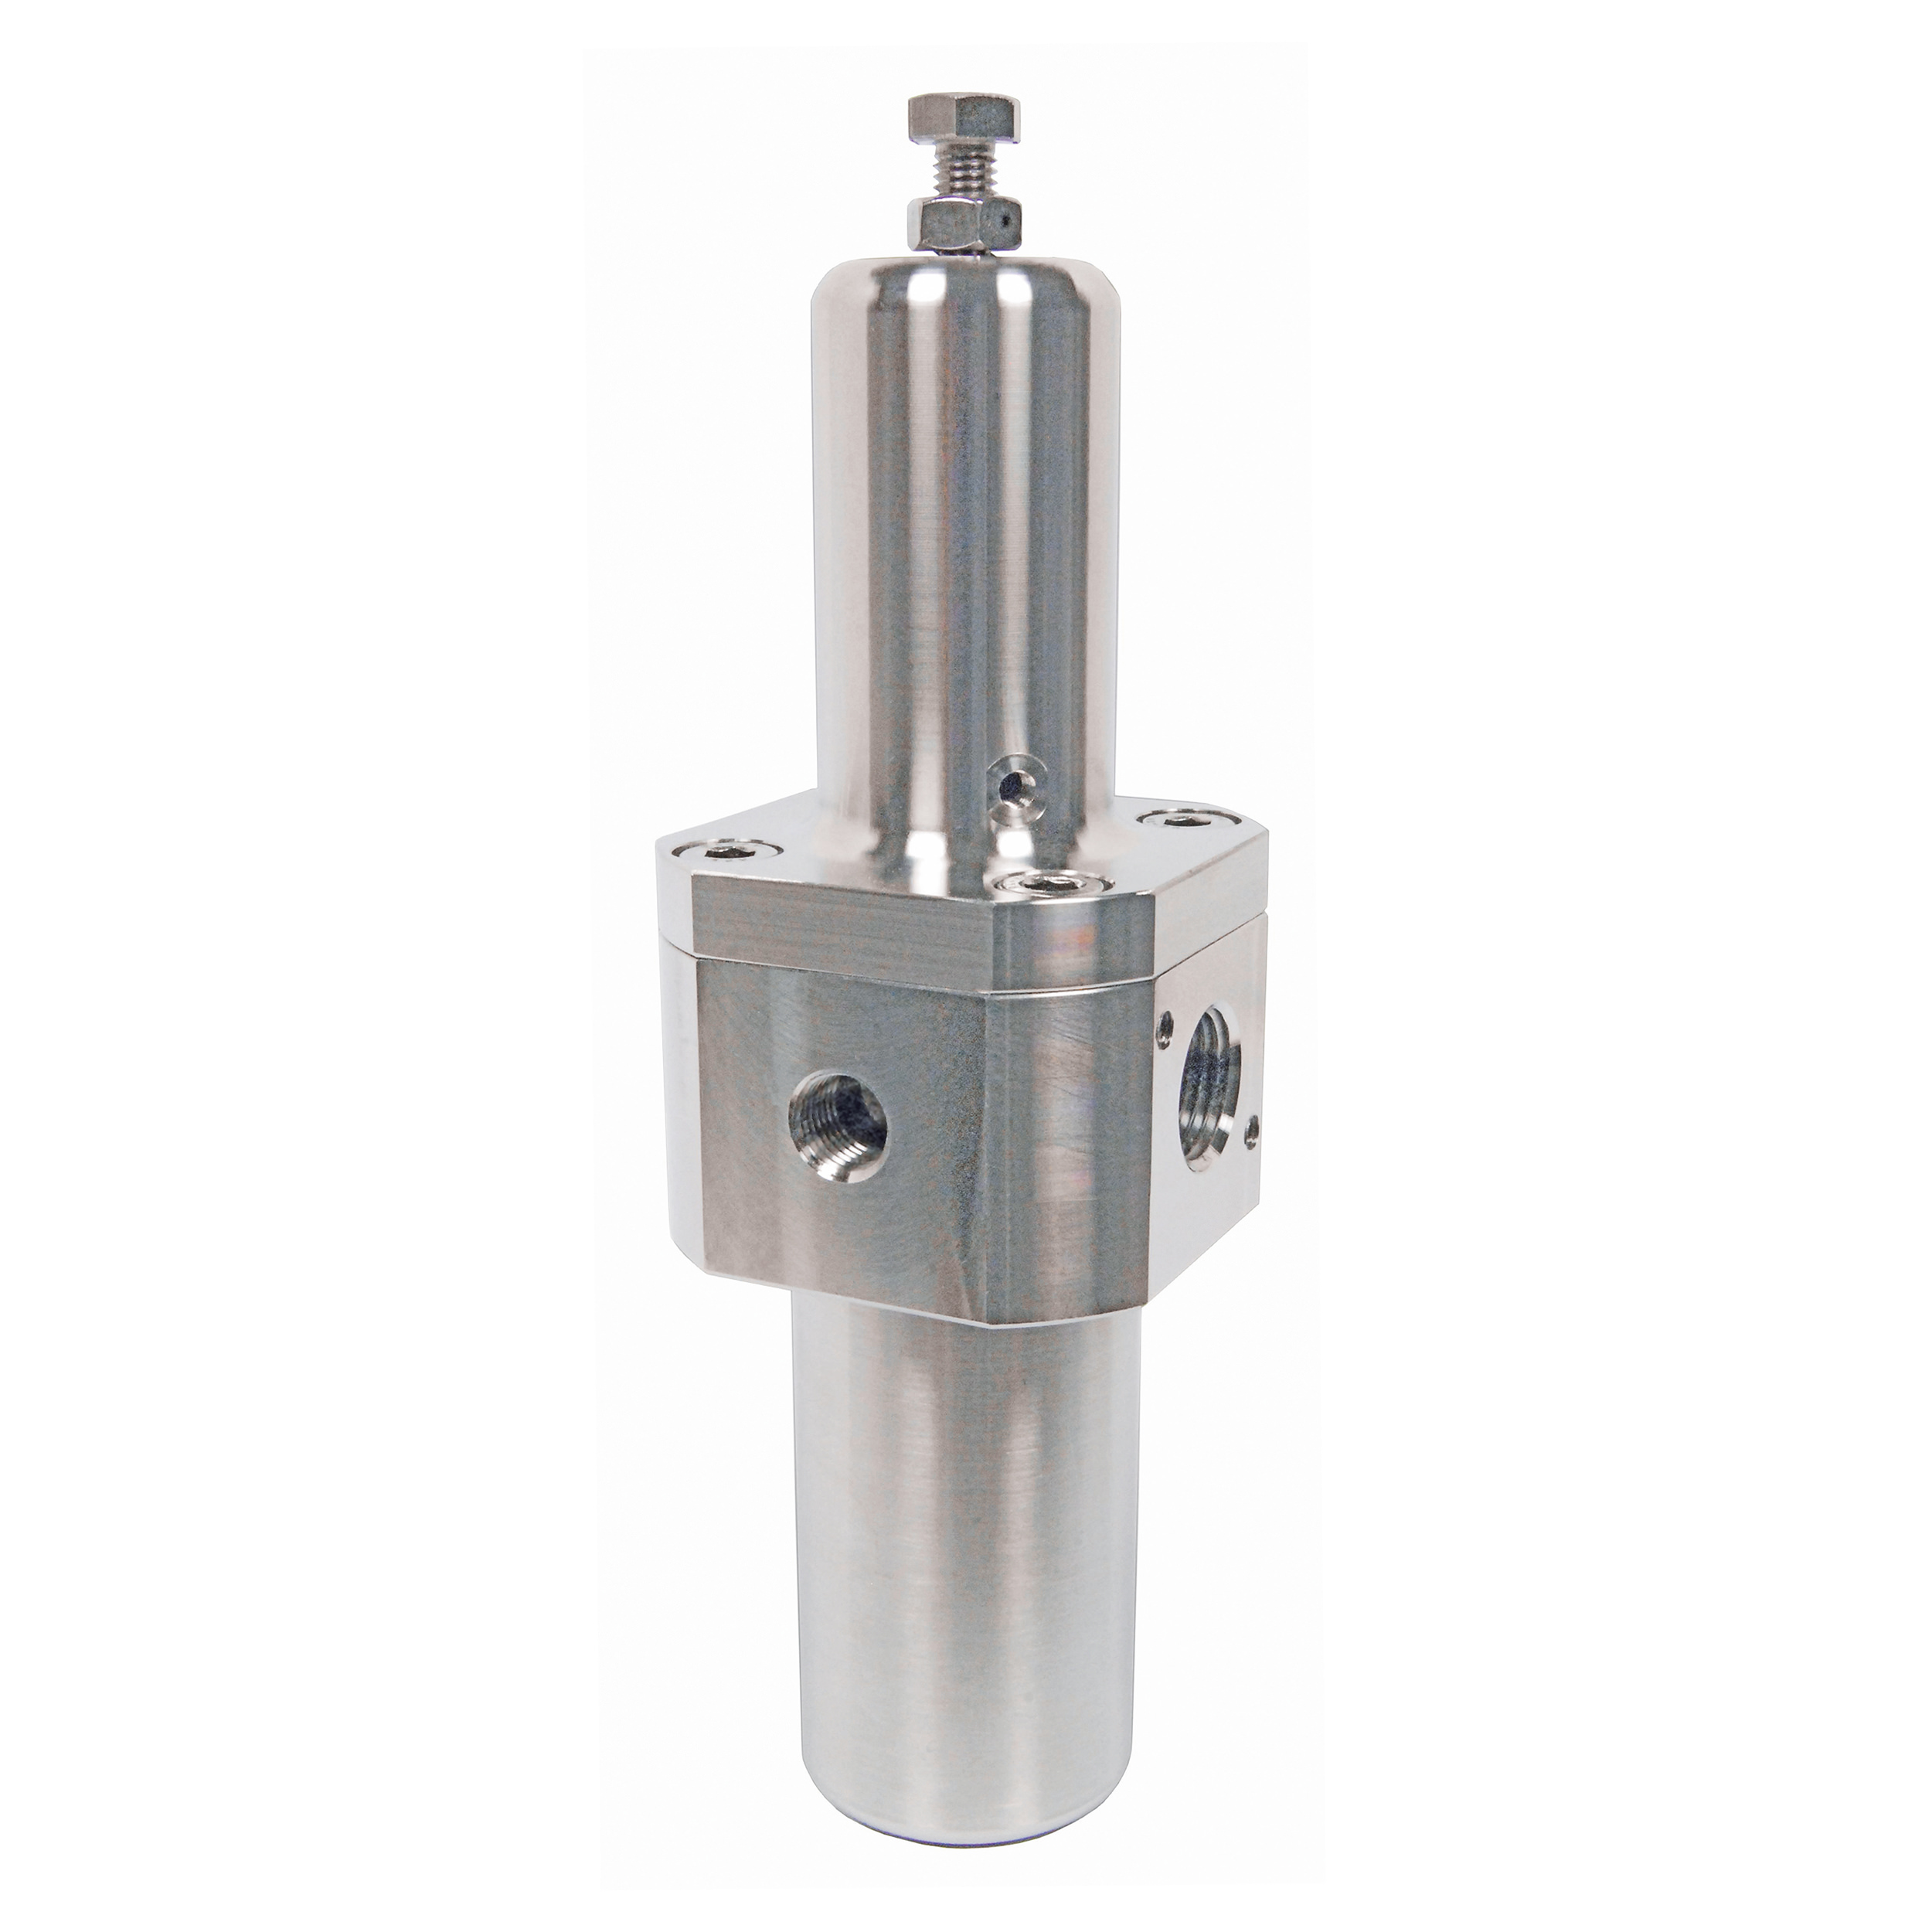 Filter pressure regulator type 690 stainless steel, gauge excl., BG 20, G¼, 2.9–43.5 psi, man. drain valve, QN: 3,000 Nl/min